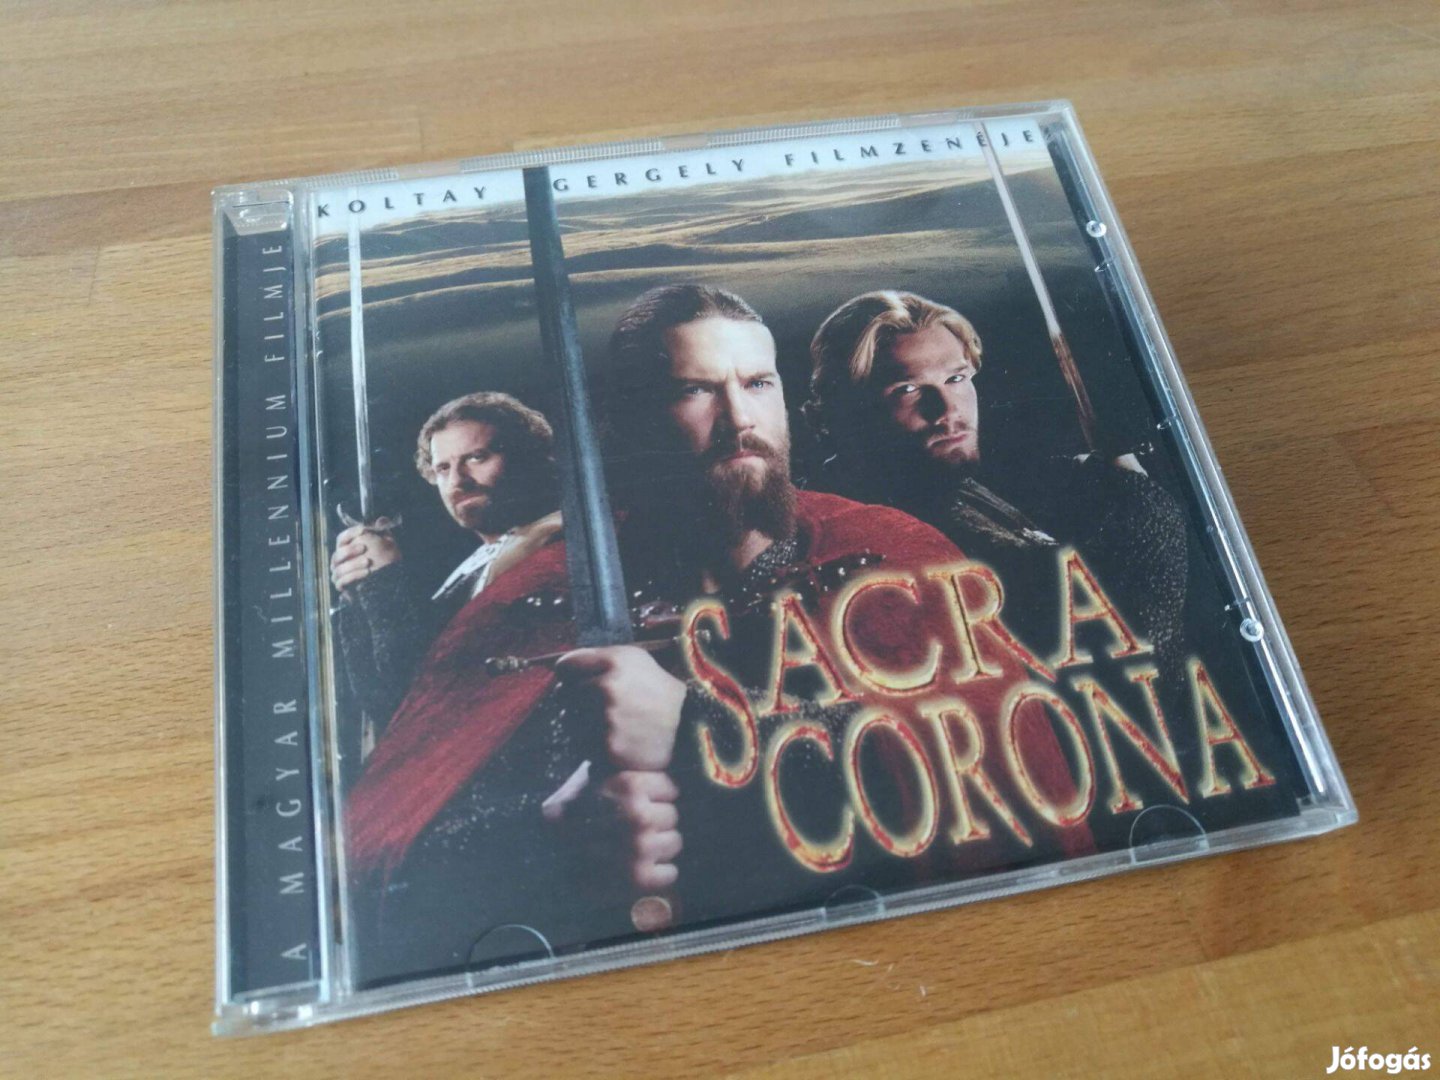 Sacra Corona - Koltay Gergely filmzenéje (Magneoton, 2001, CD)